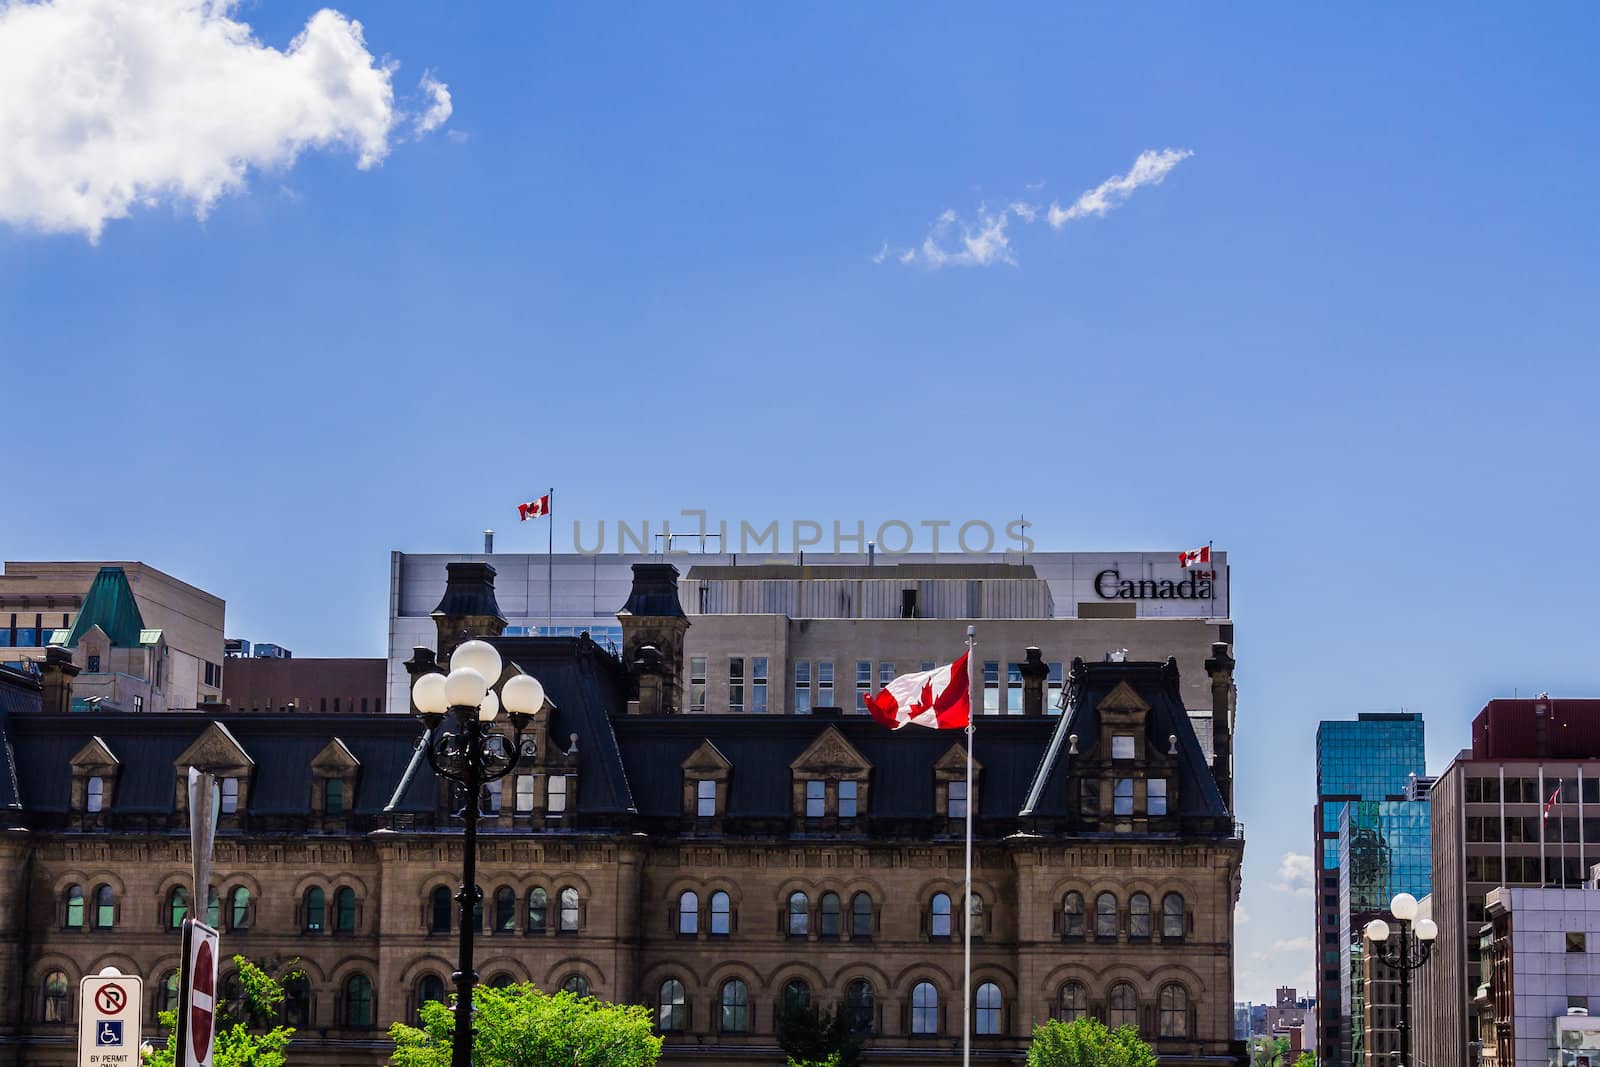 Building in Ottawa by petkolophoto